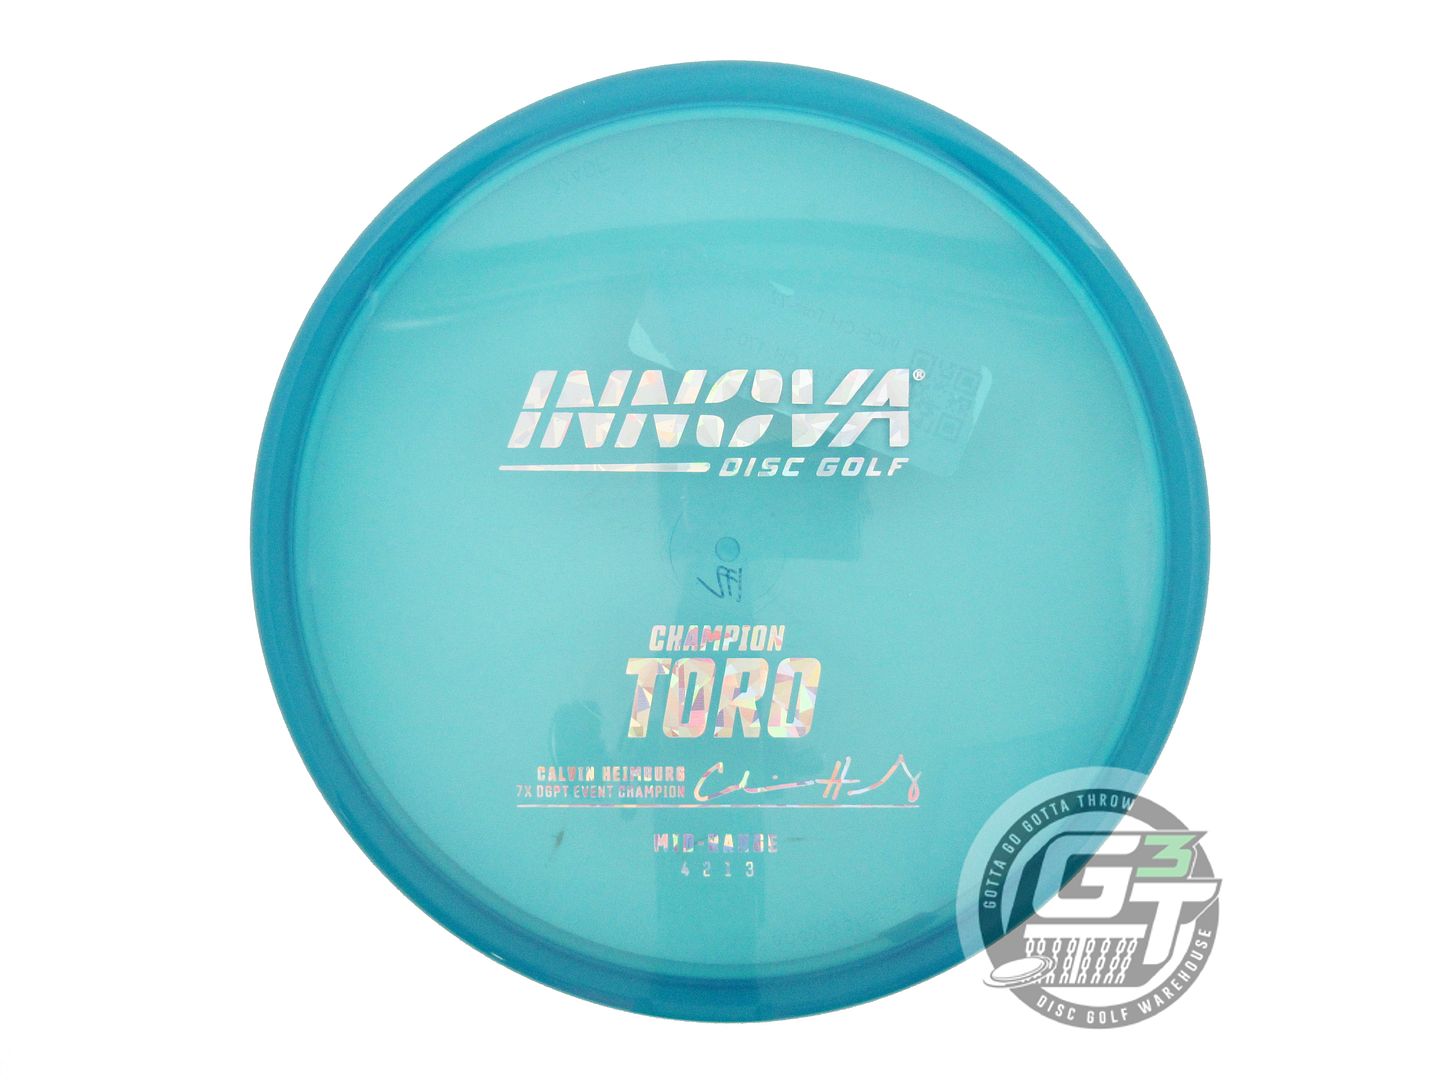 Innova Champion Toro [Calvin Heimburg 5X DGPT] Midrange Golf Disc (Individually Listed)